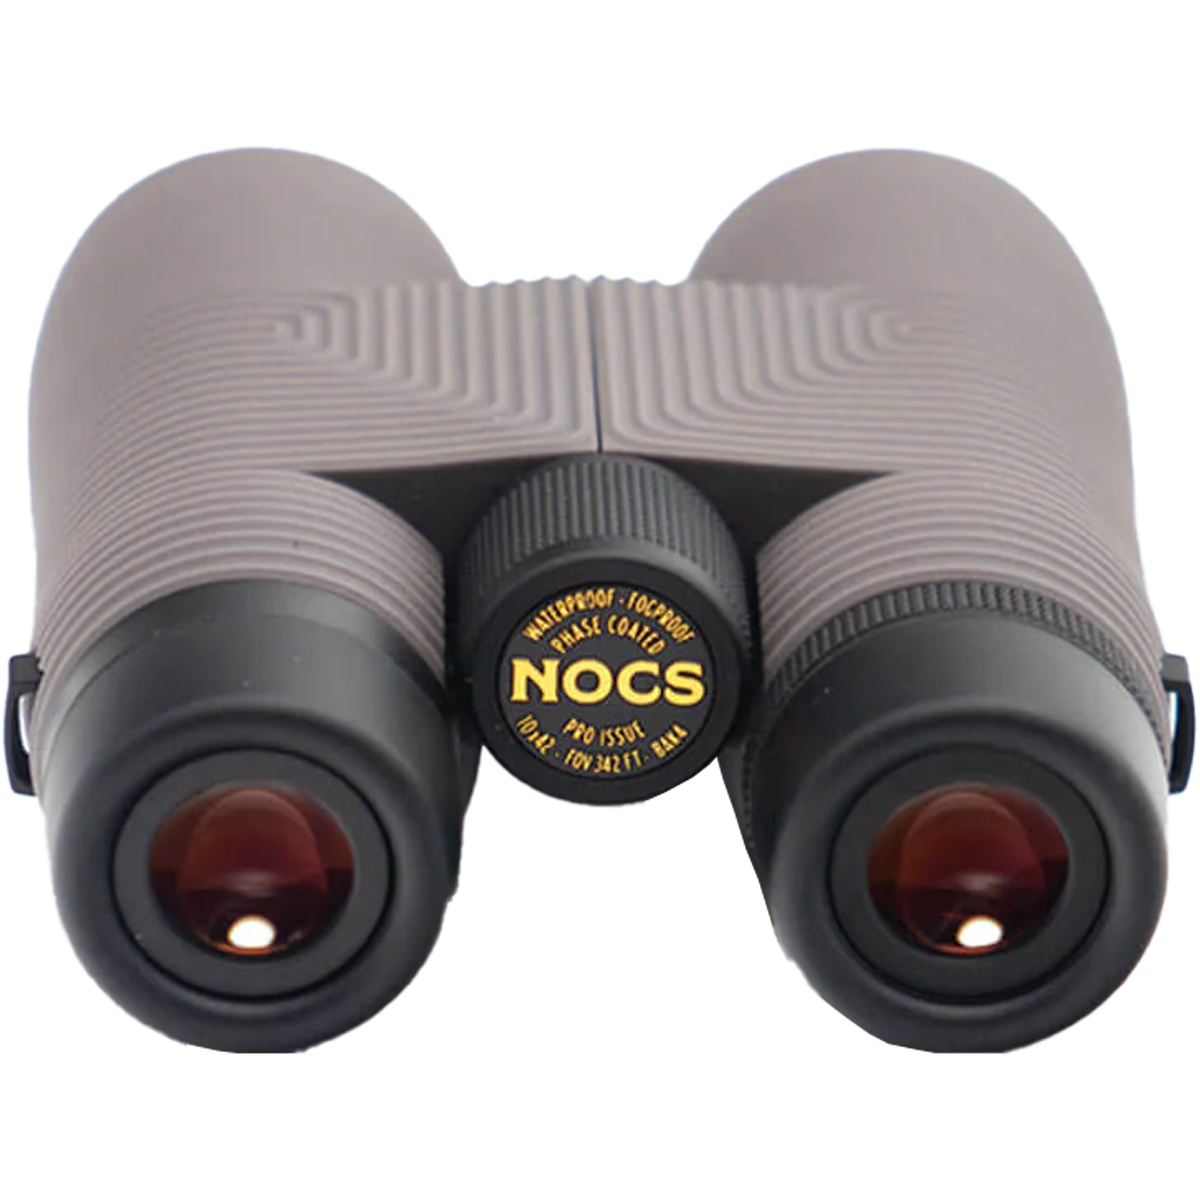 Pro Issue 10x42 Binoculars alternate view